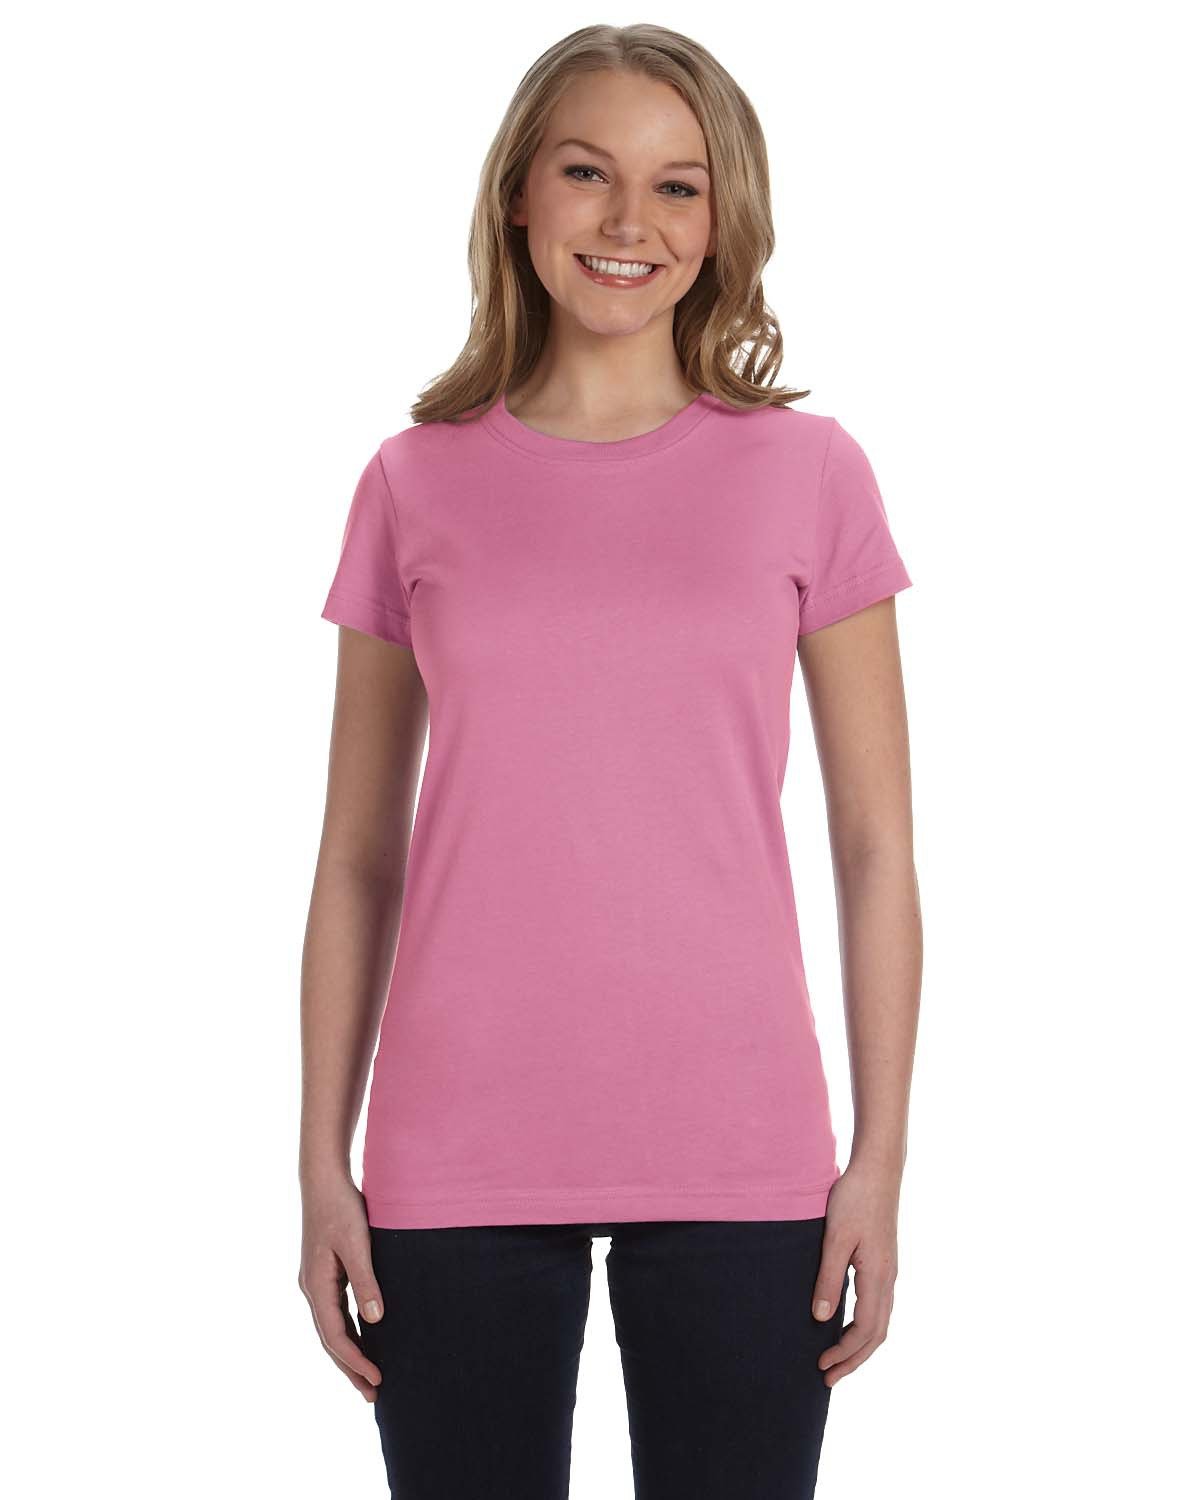 LAT Ladies' Junior Fit T-Shirt pink 